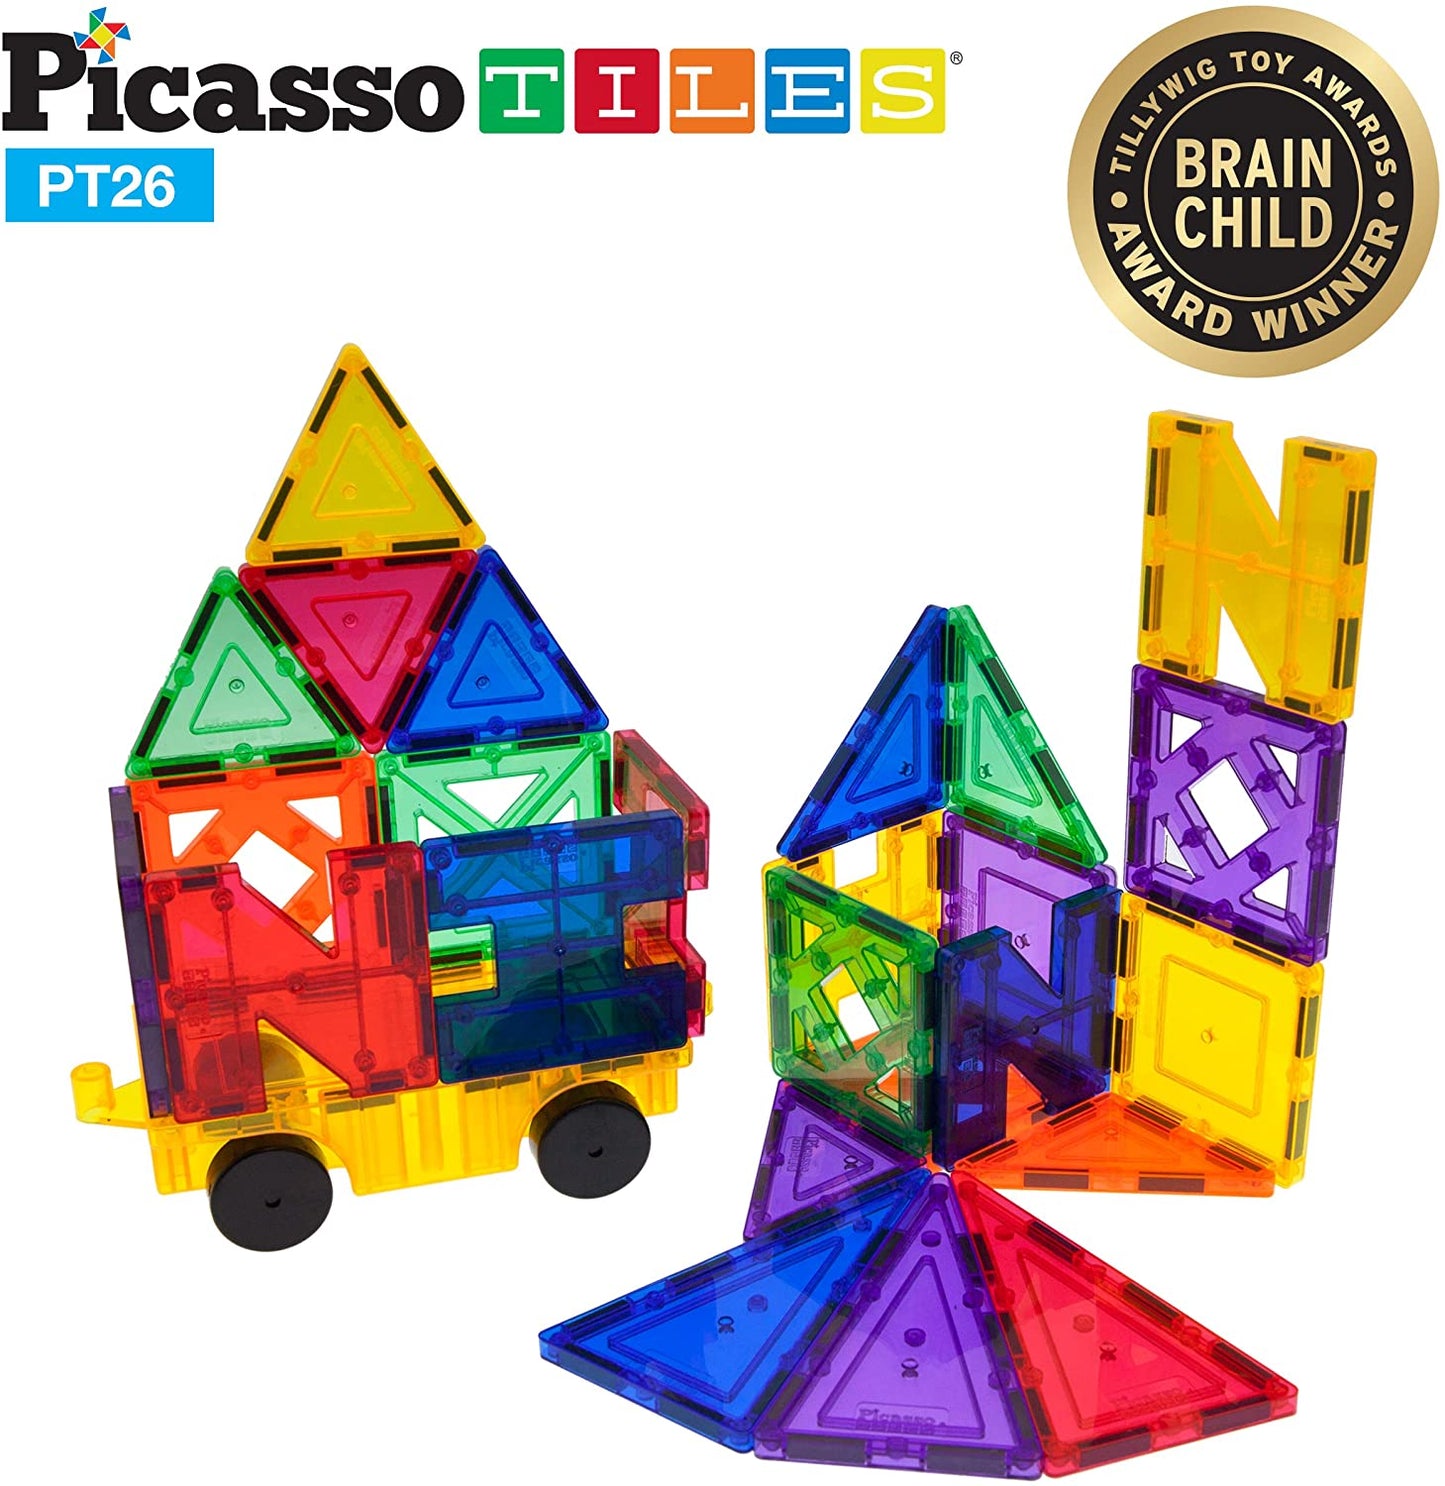 PicassoTiles 26pc Inspiration Magnetic Tile Set